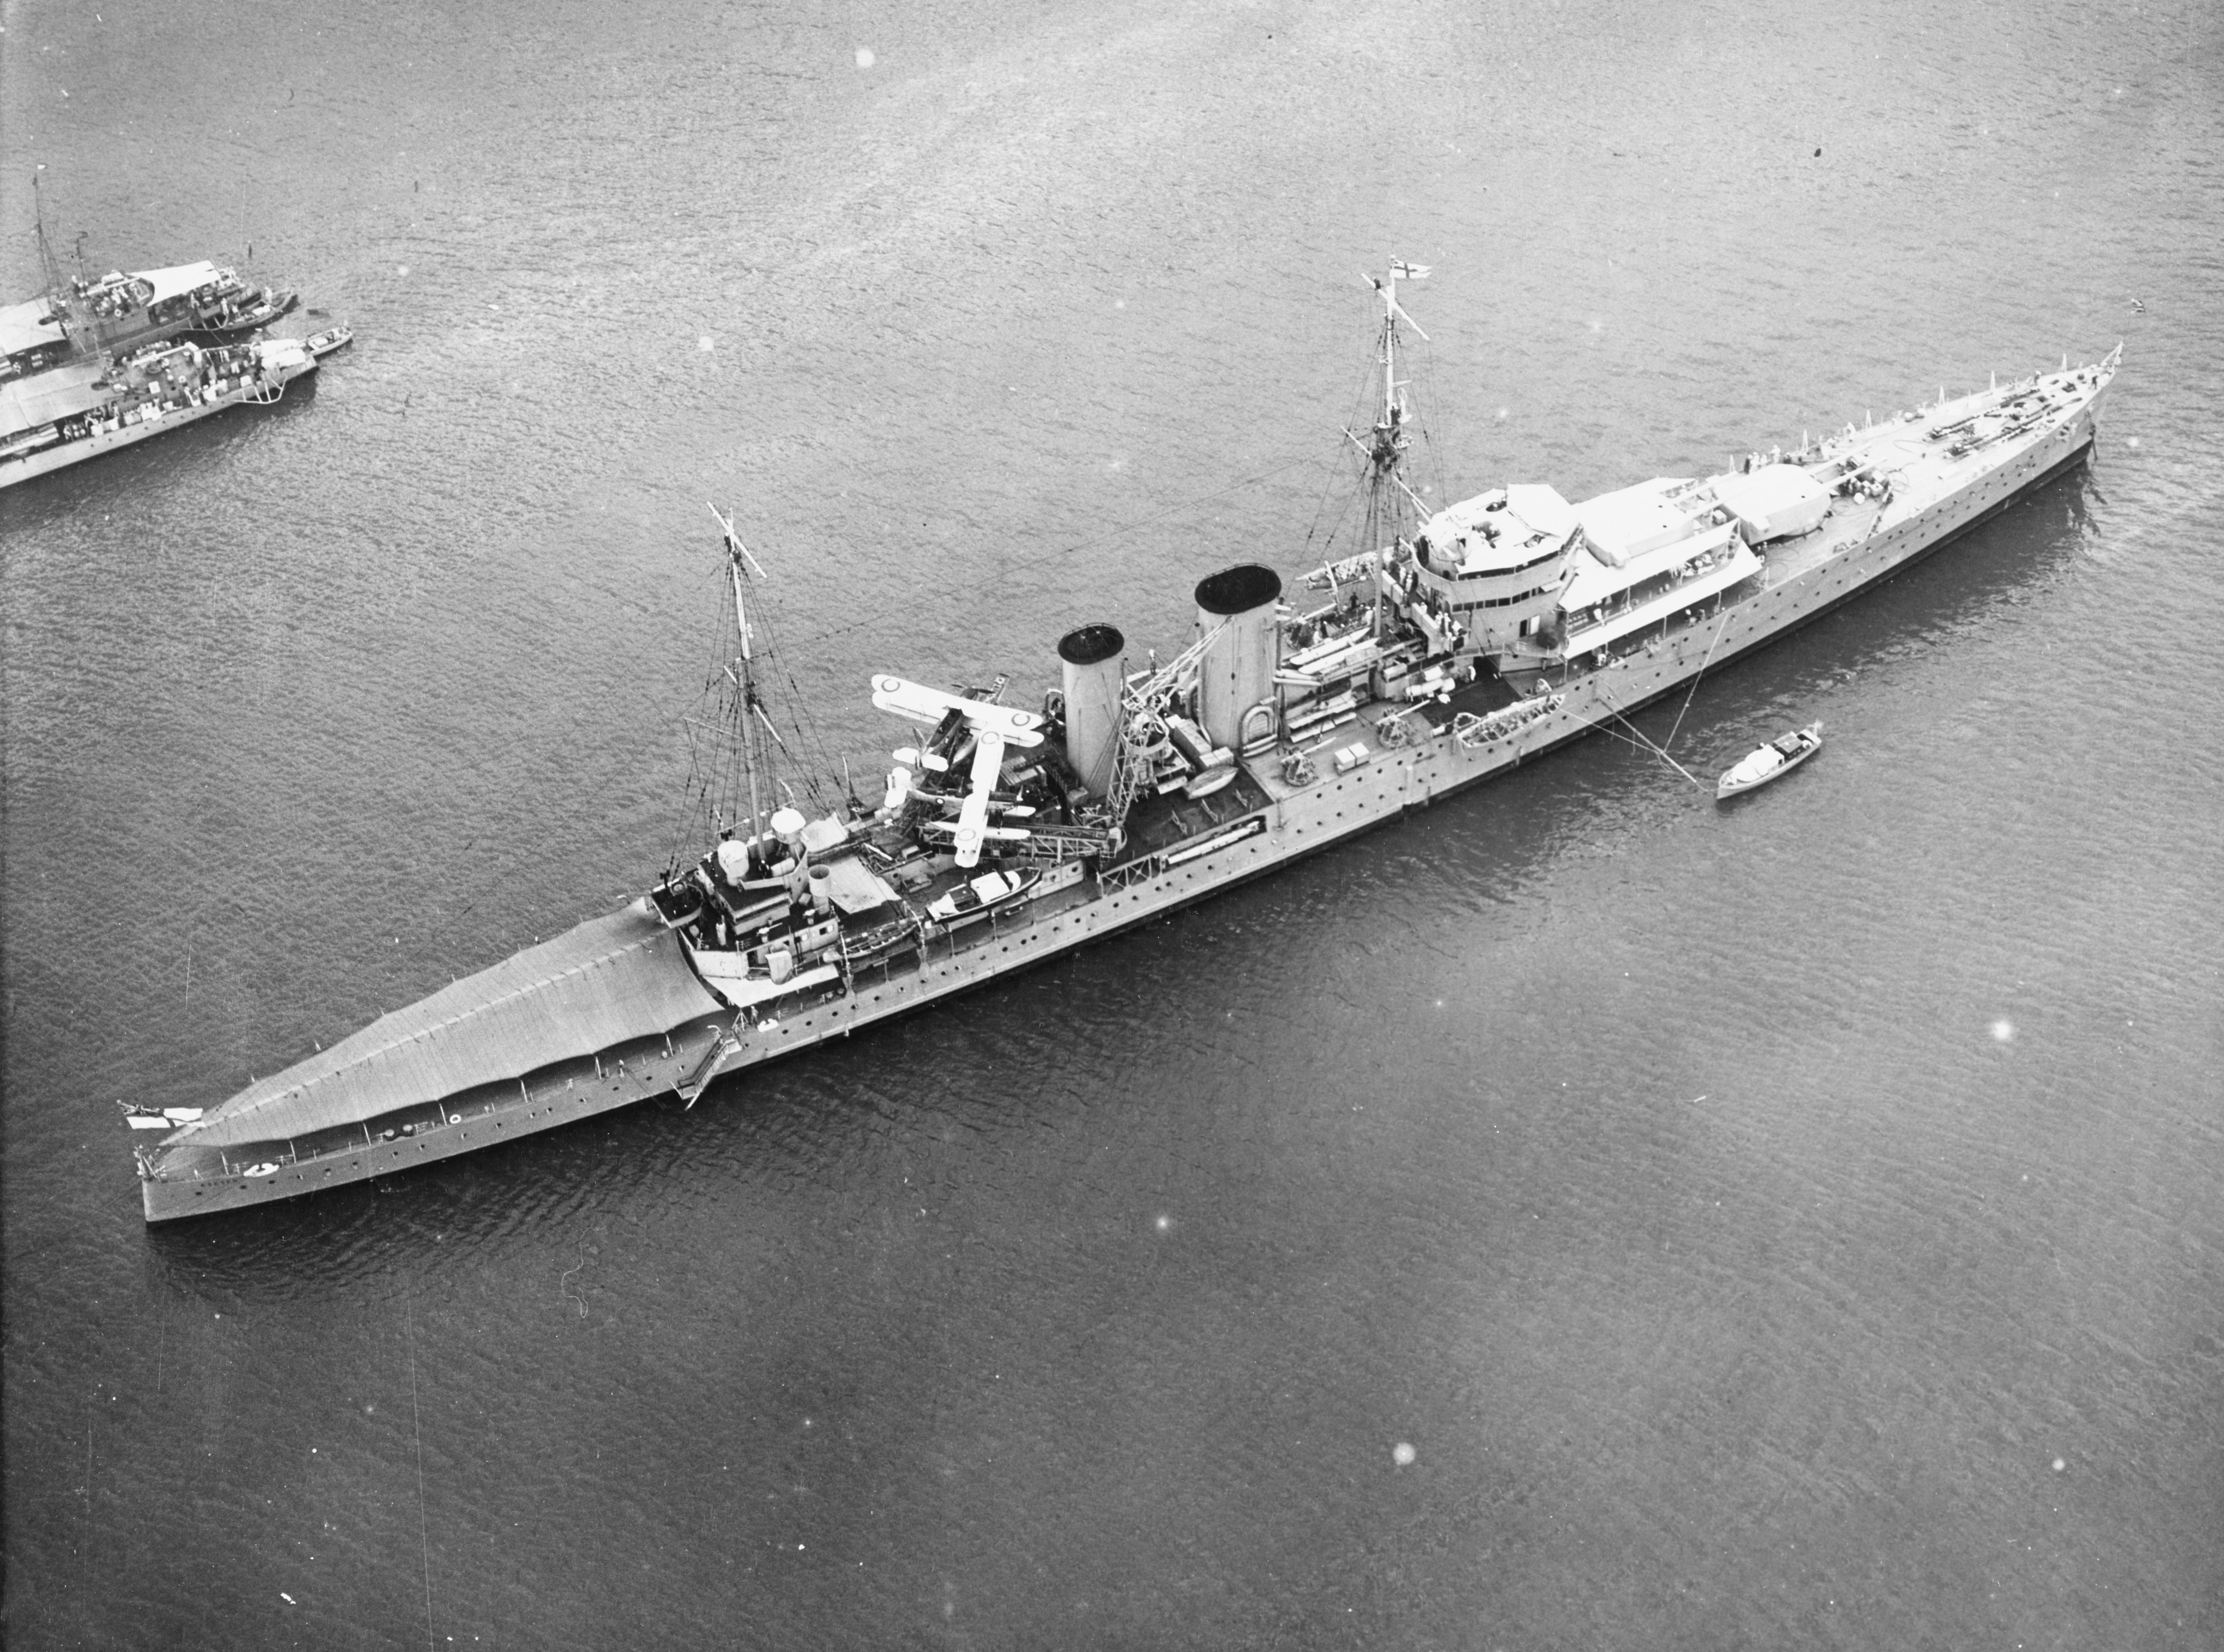 HMS Exeter at Balboa harbor, Panama Canal Zone, 24 Apr 1934